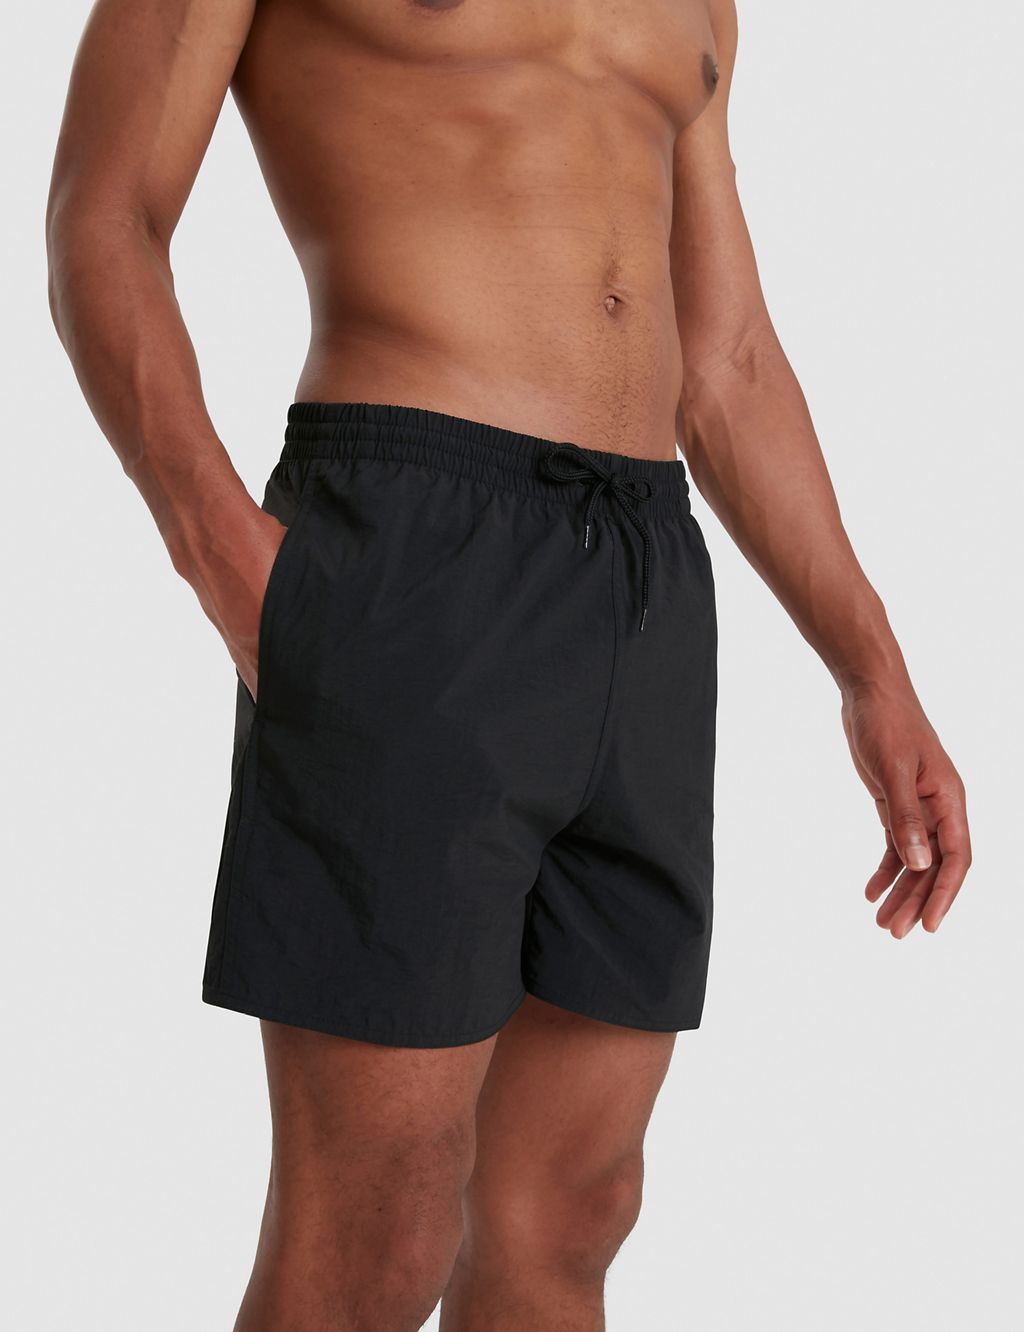 Pocketed Swim Shorts | Speedo | M&S